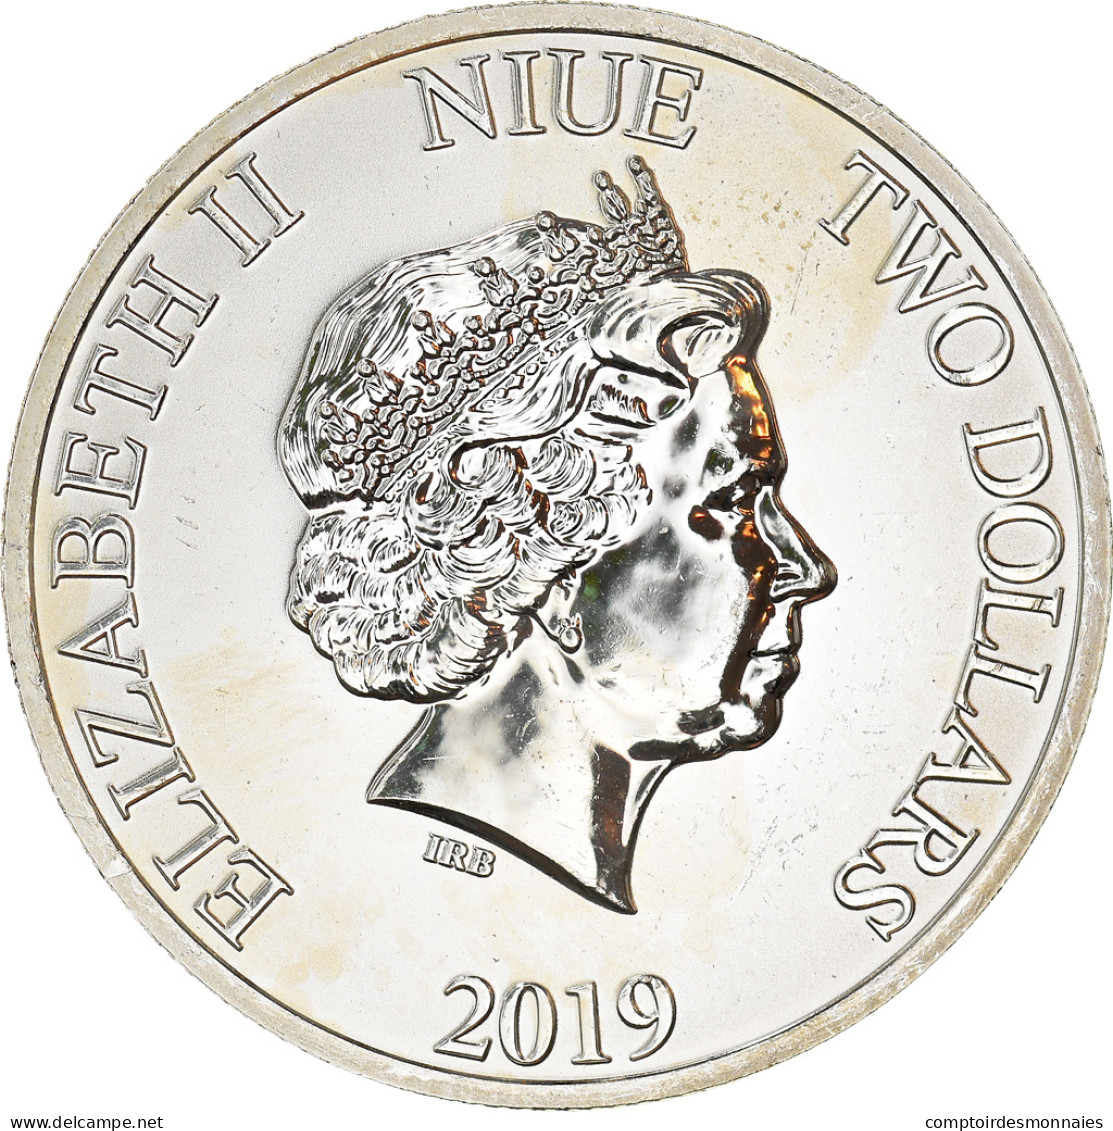 Monnaie, Niue, Turtle, 2 Dollars, 2016, Proof, FDC, Argent - Niue